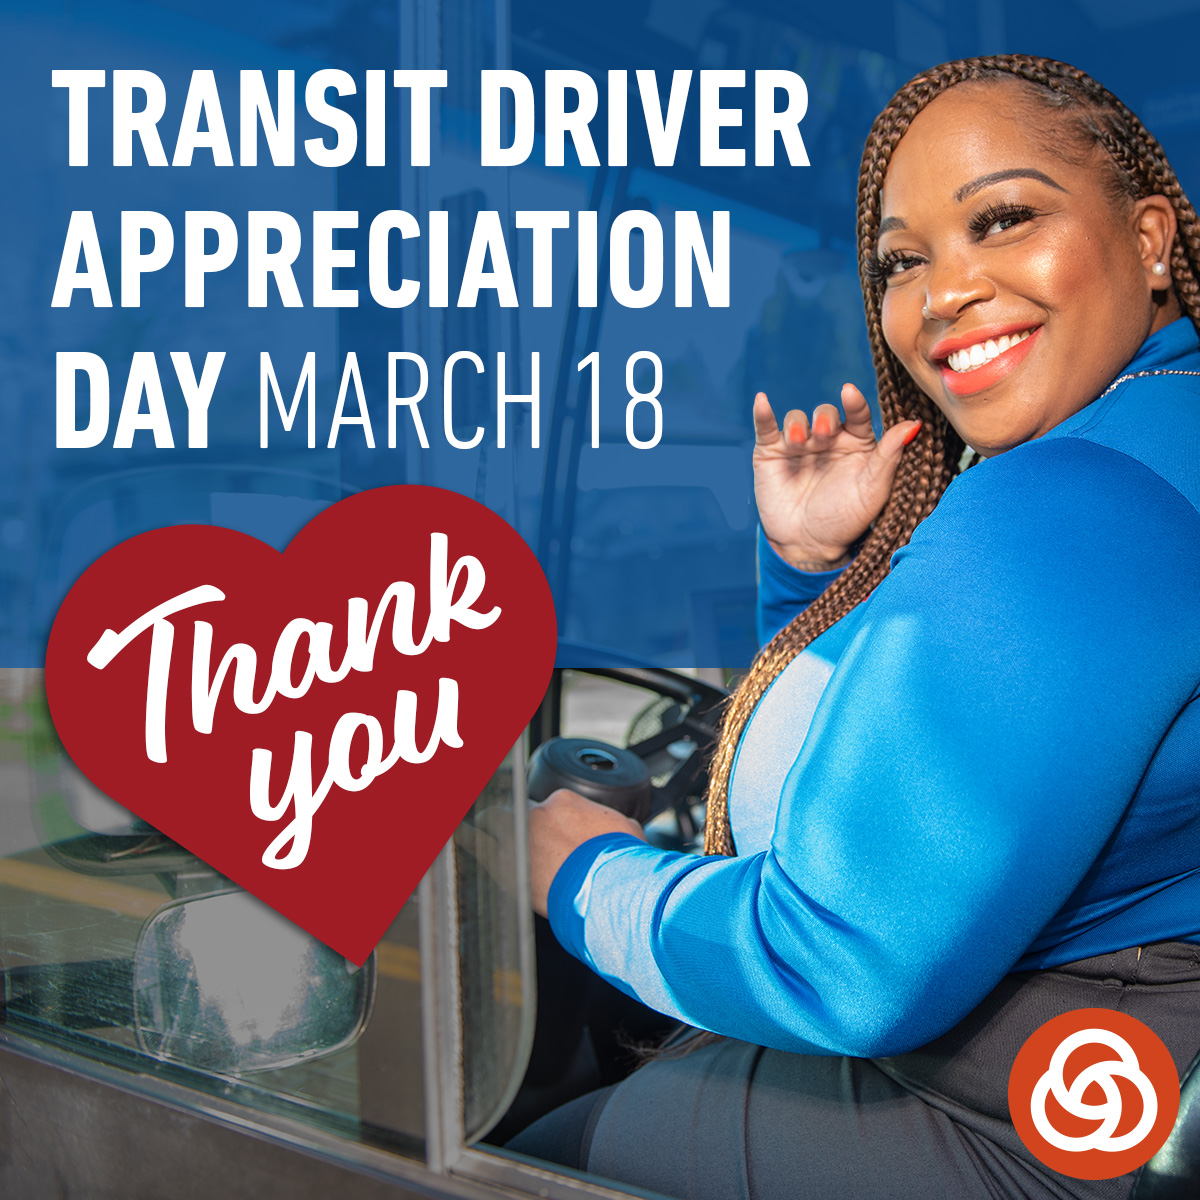 Transit Driver Appreciation Day sharing image